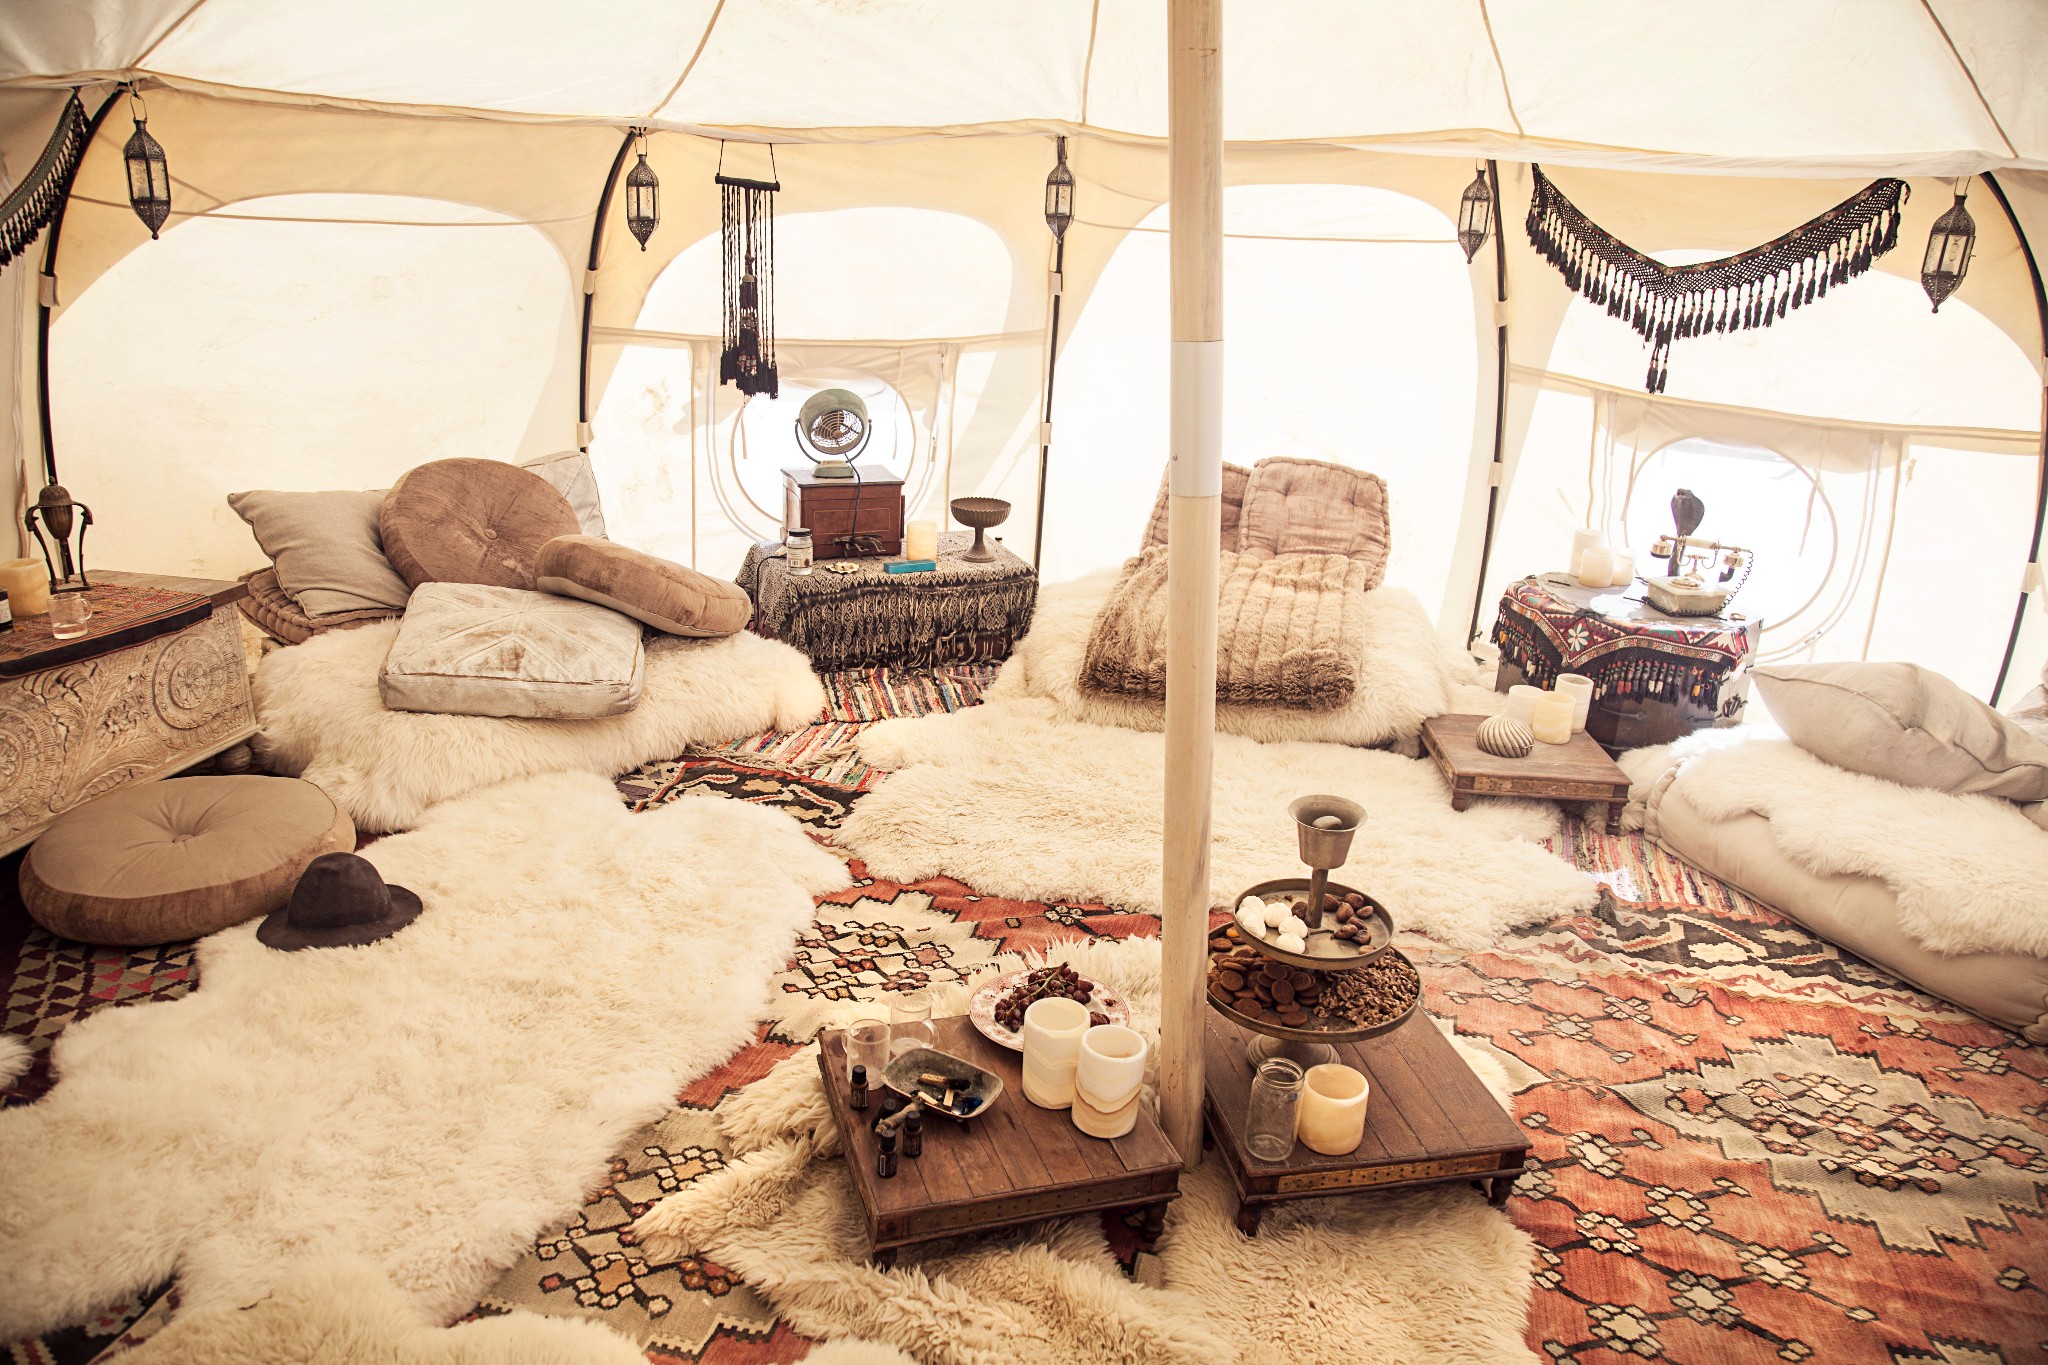 Glamorous camping tent